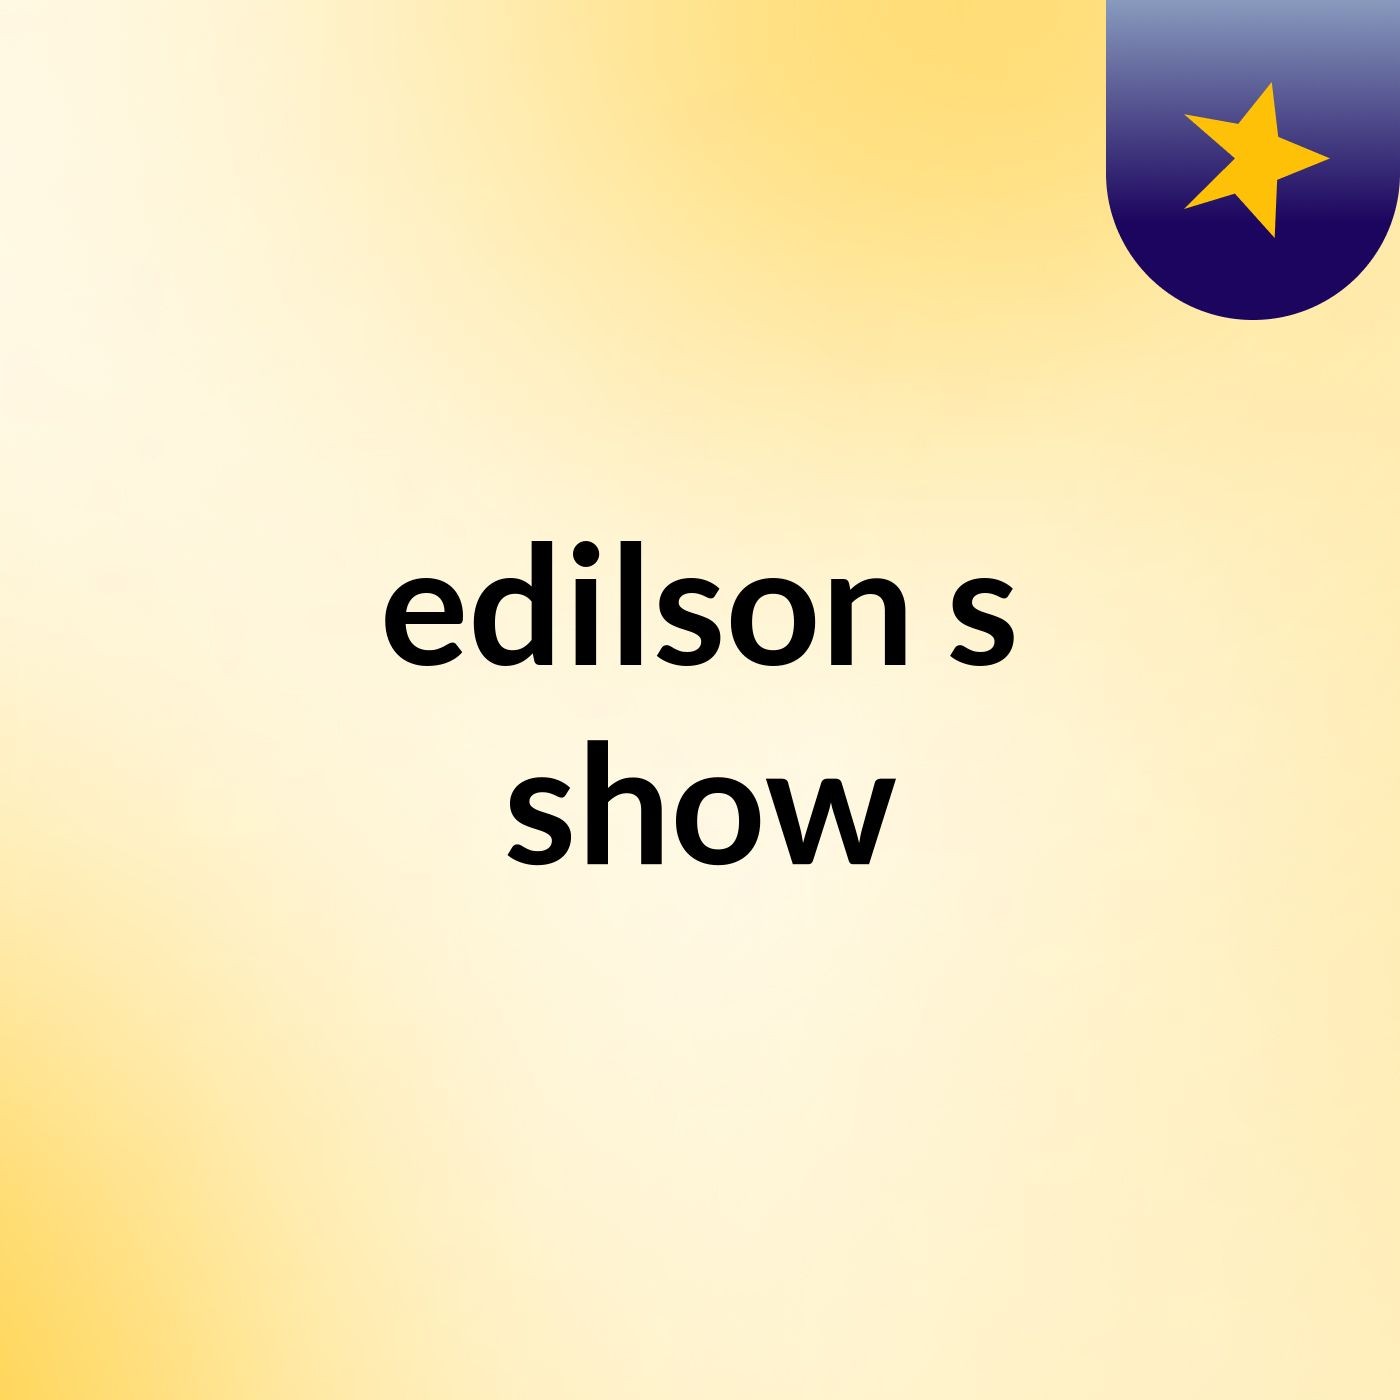 edilson's show